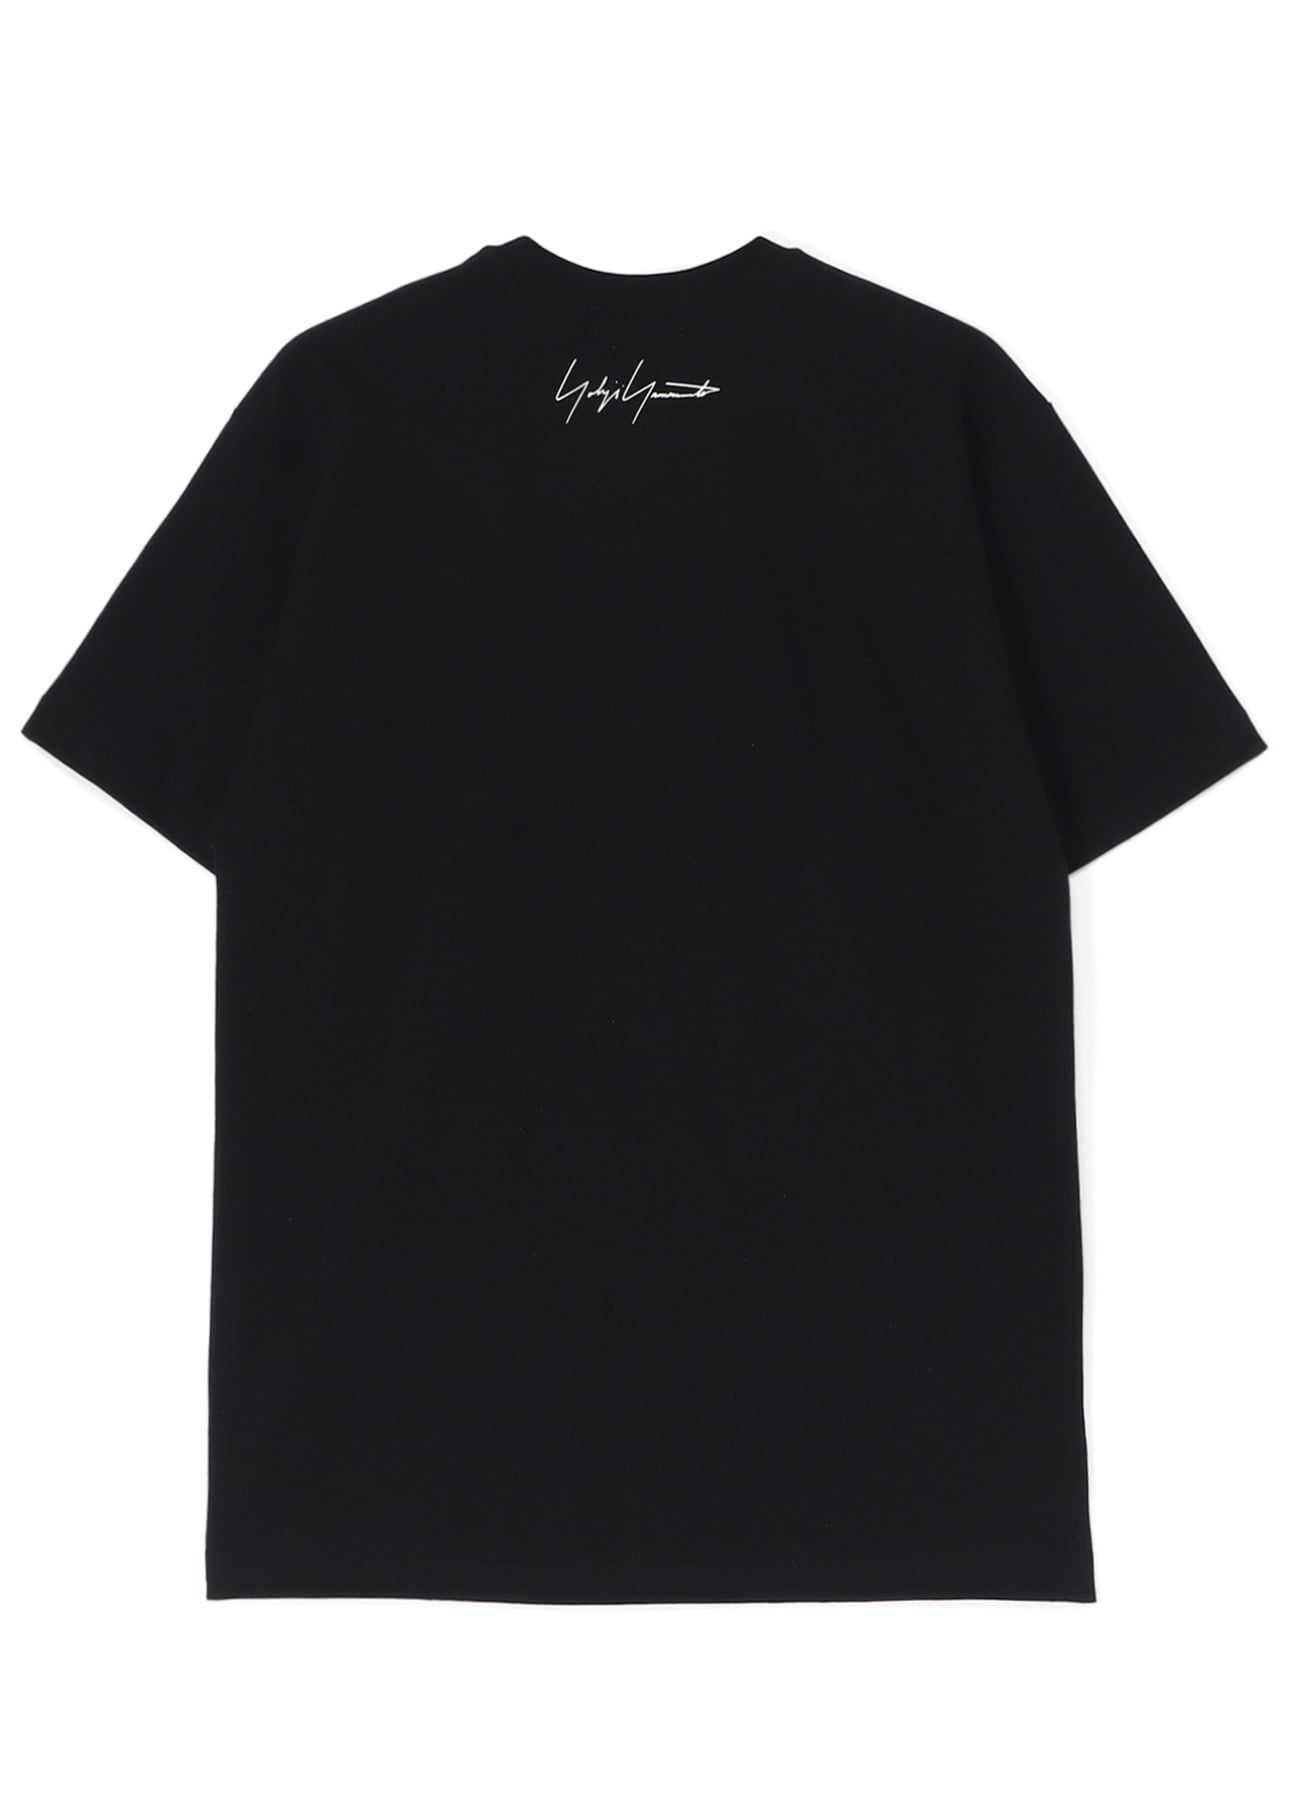 3 PACK T-shirt (S WhitexBlackxBlack): Yohji Yamamoto｜ THE SHOP 